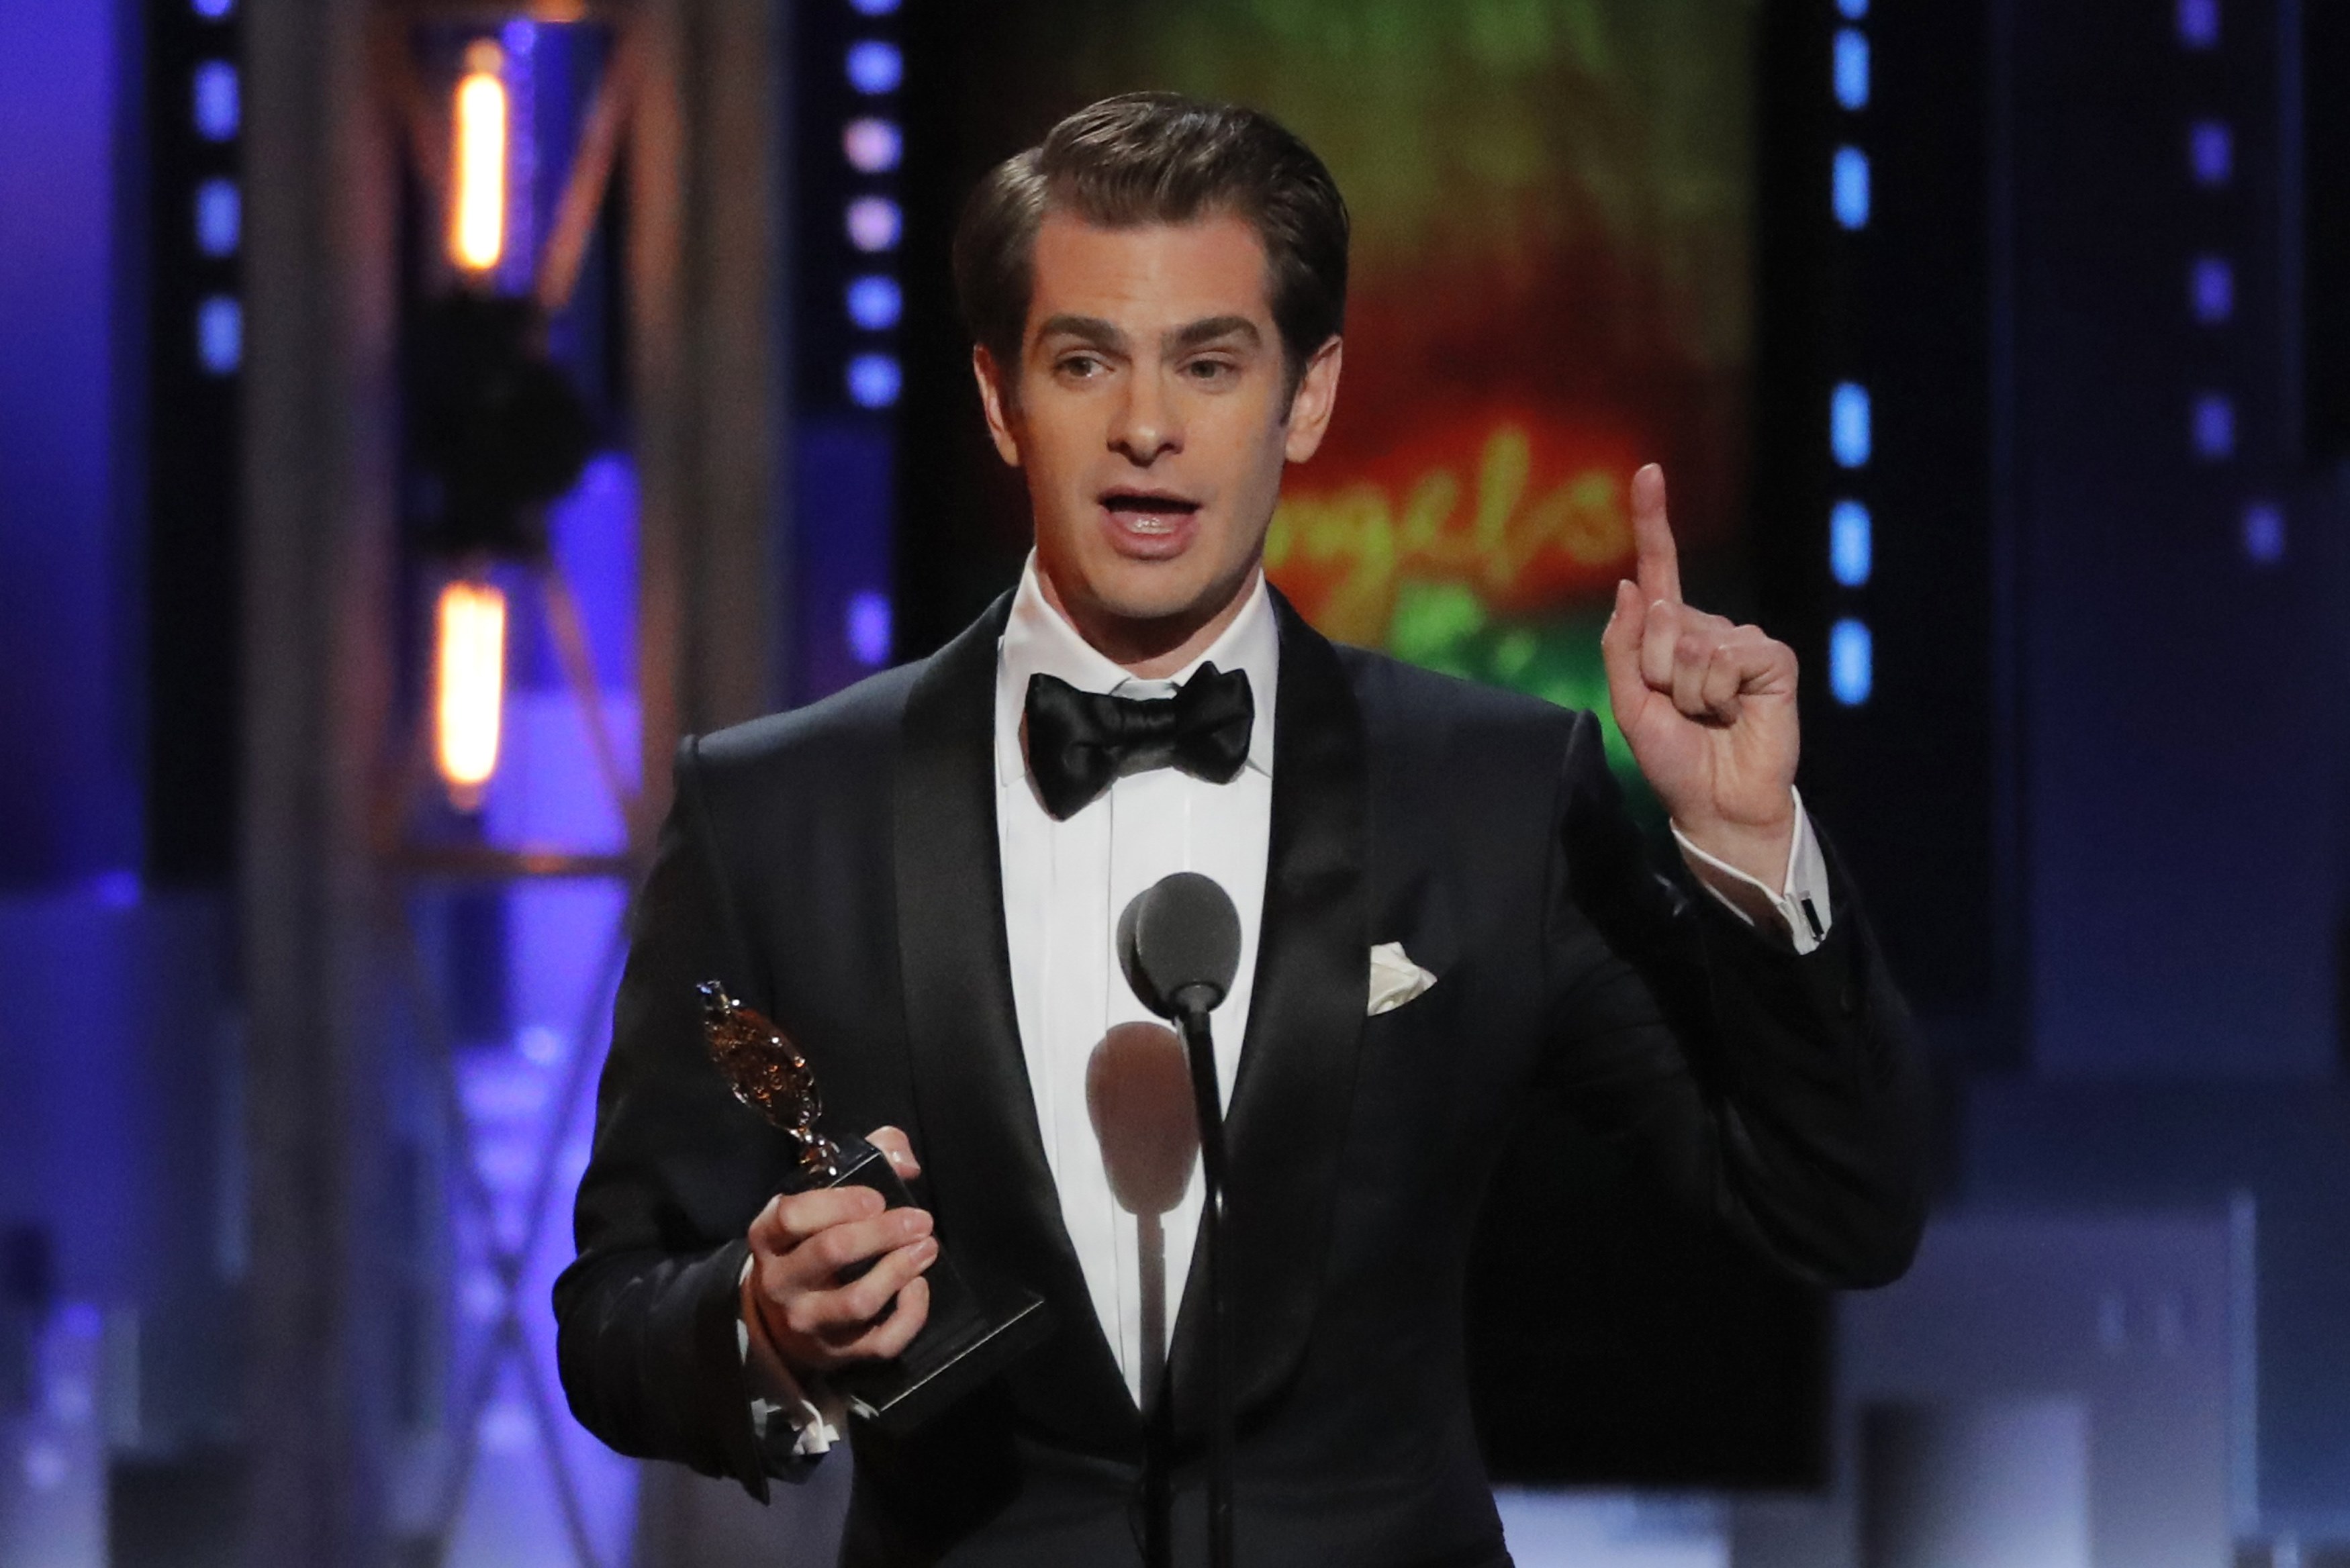 'Harry Potter' wins best play at Tony Awards while De Niro uses profanity against Trump